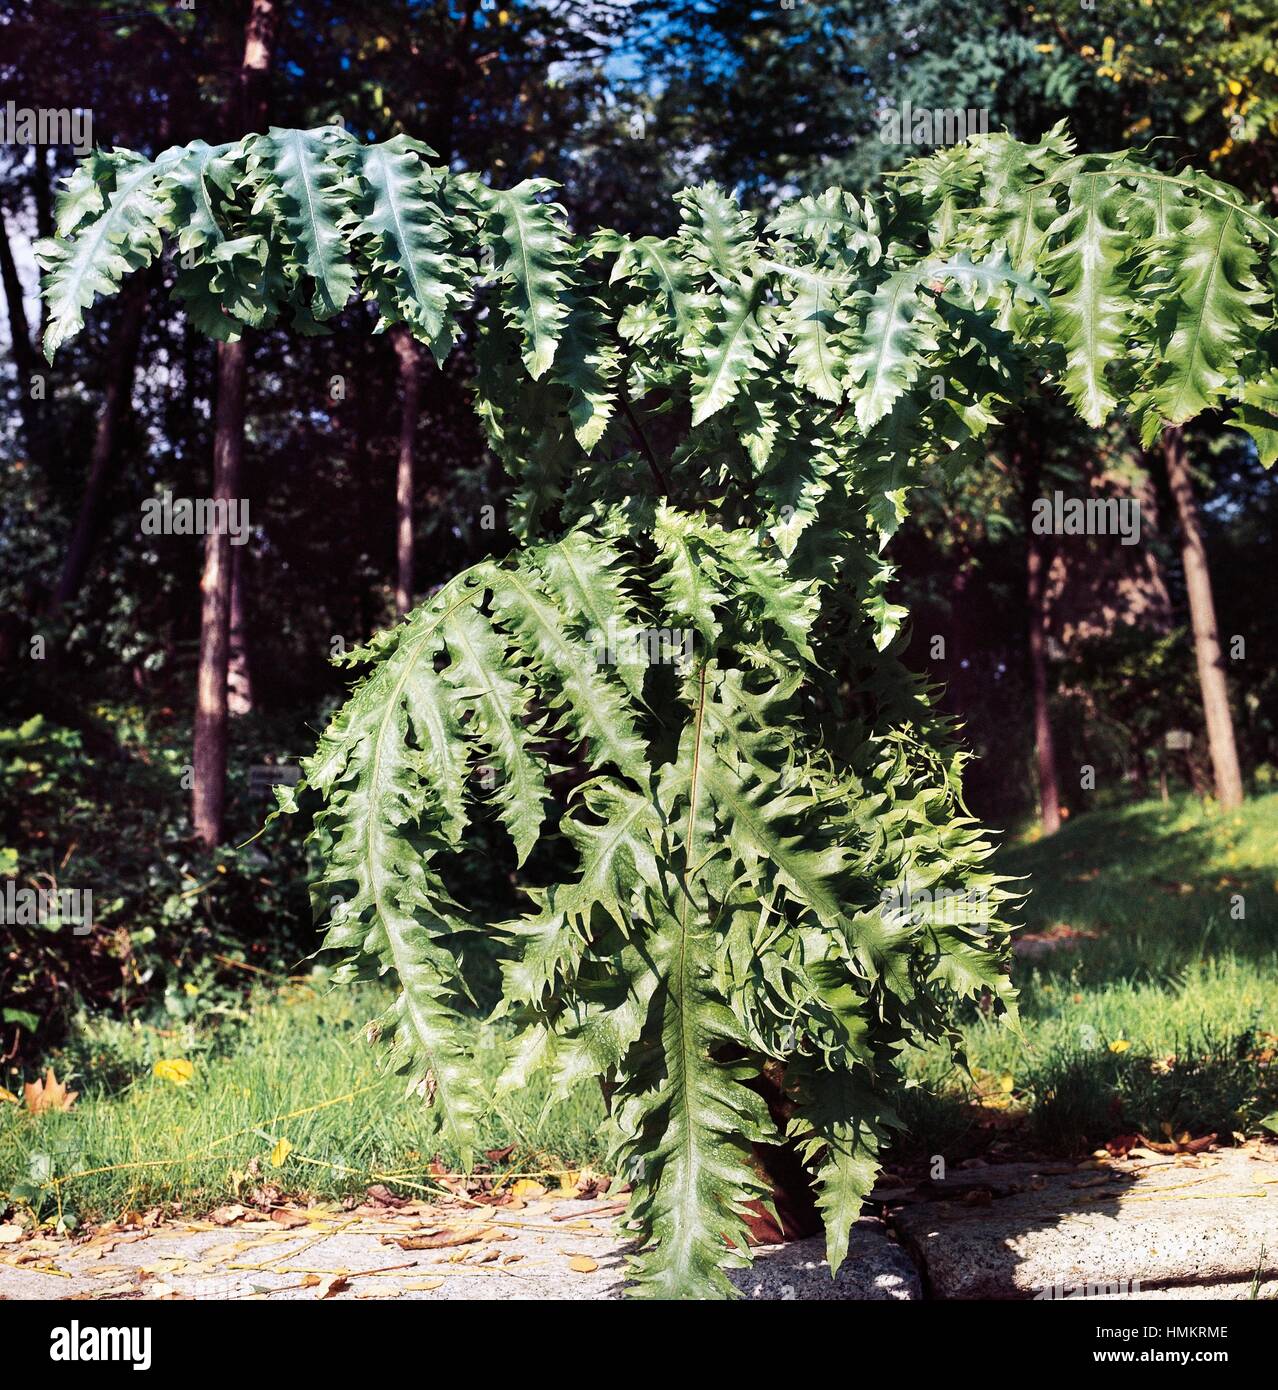 Genere Aglaomorpha felce, Polypodiaceae. Foto Stock